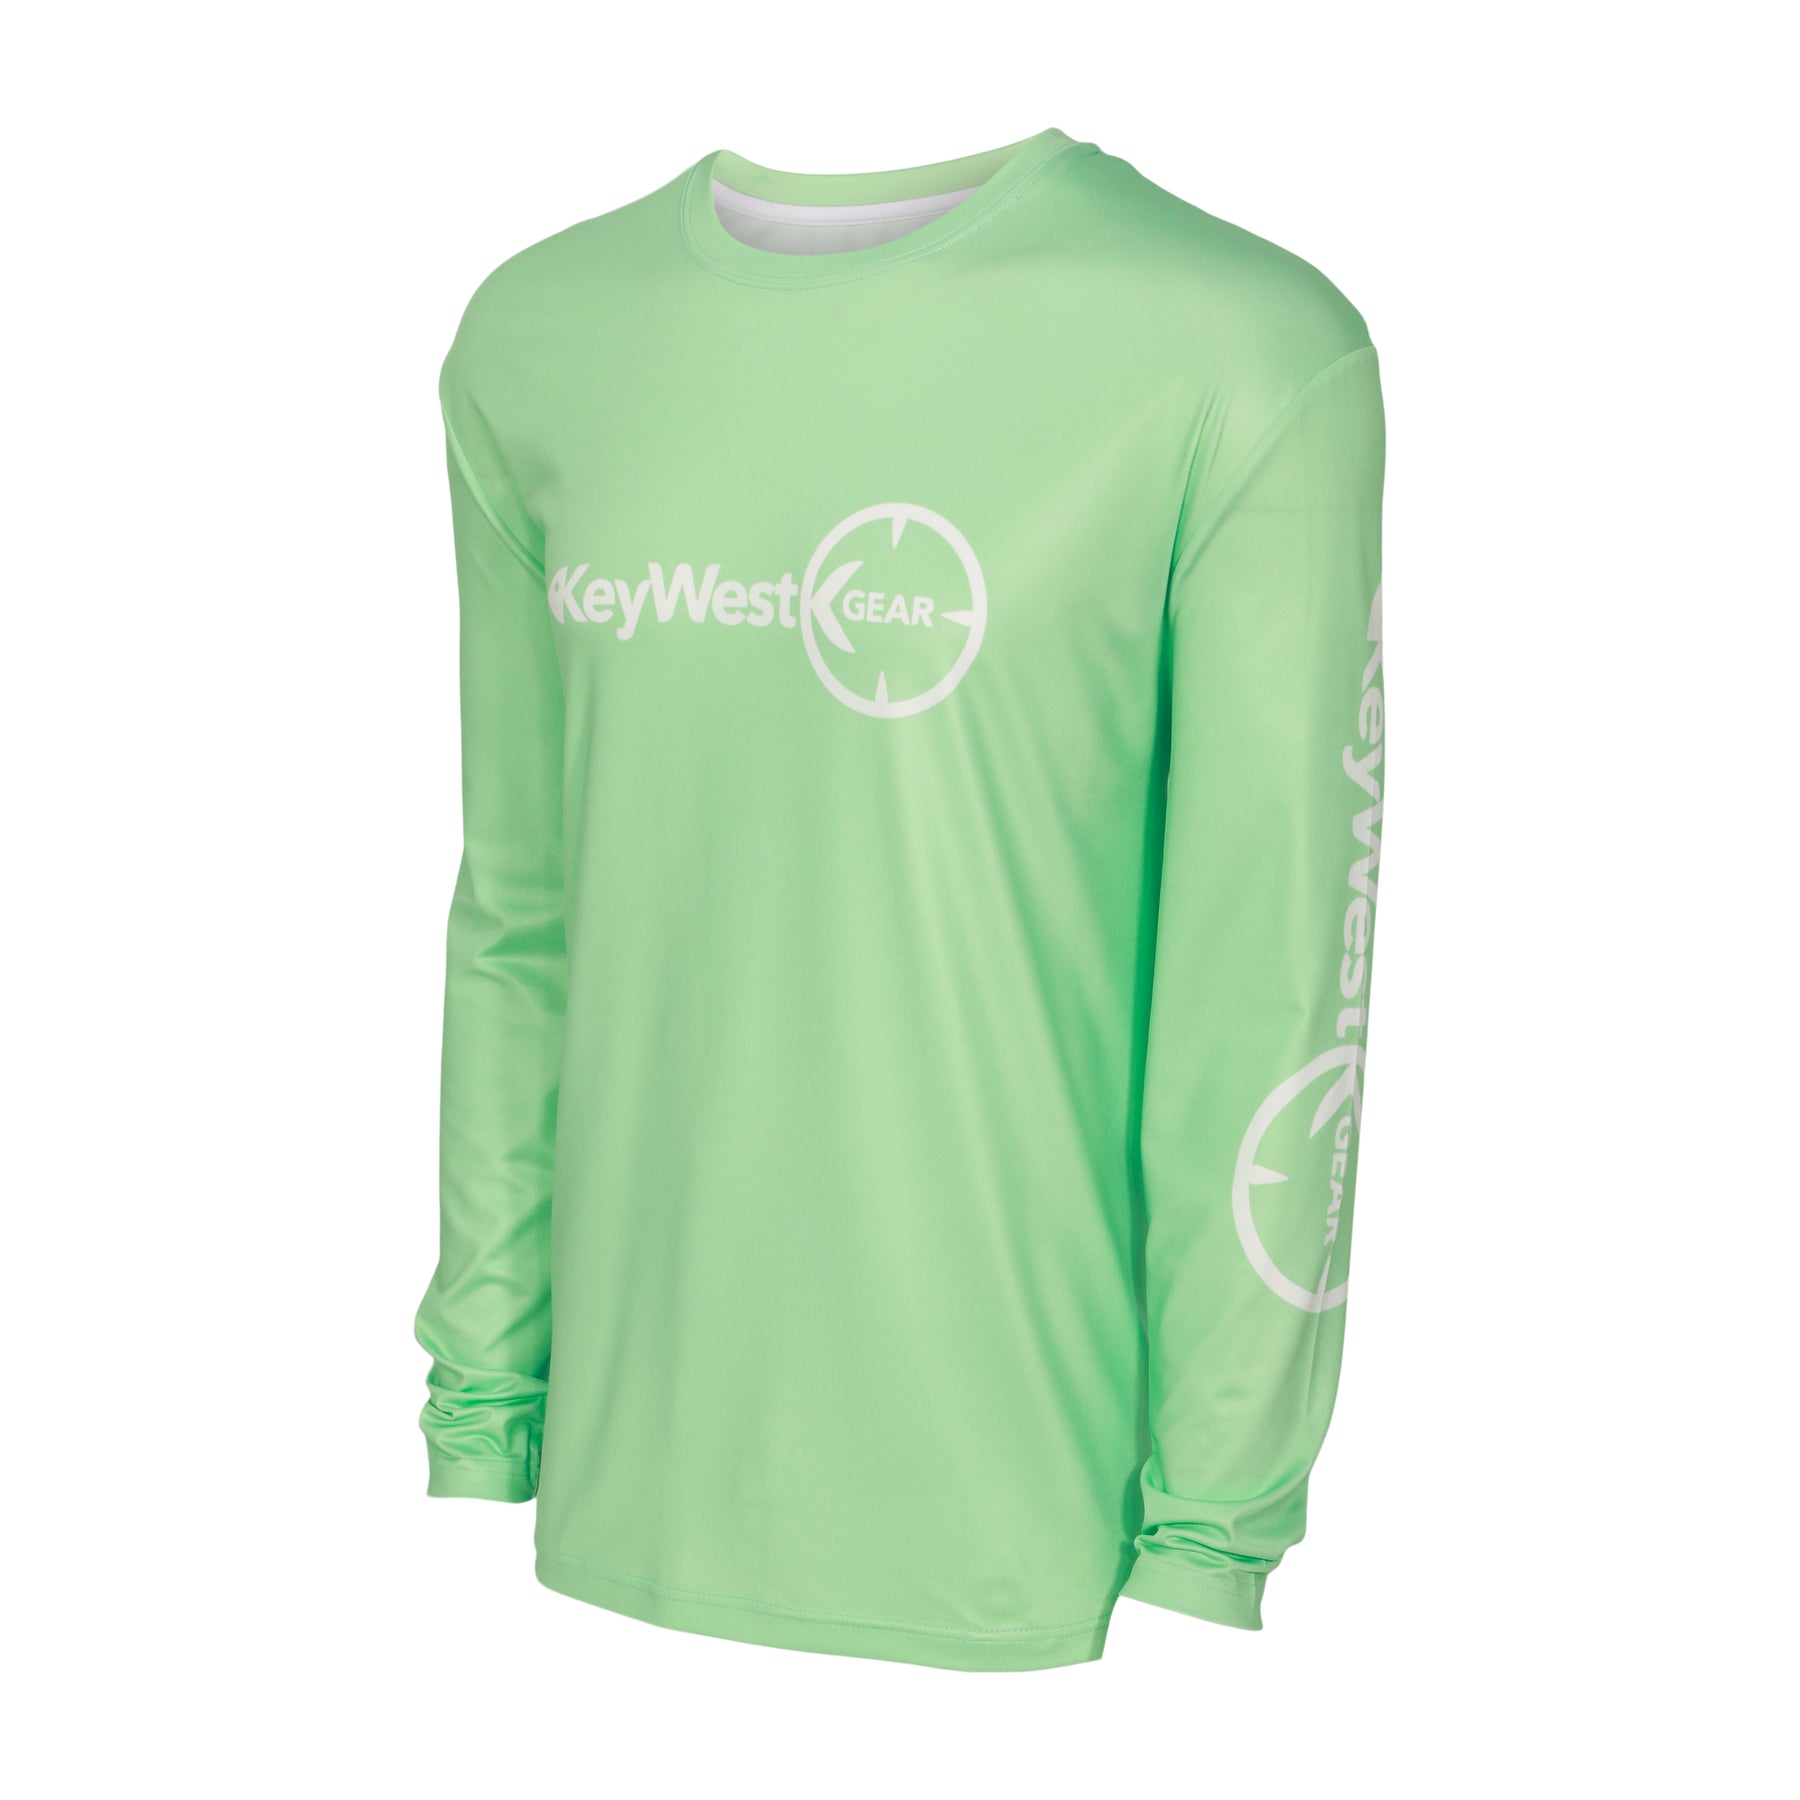 Key West Gear Lime Long Sleeve Performance Shirt – Key West Gear